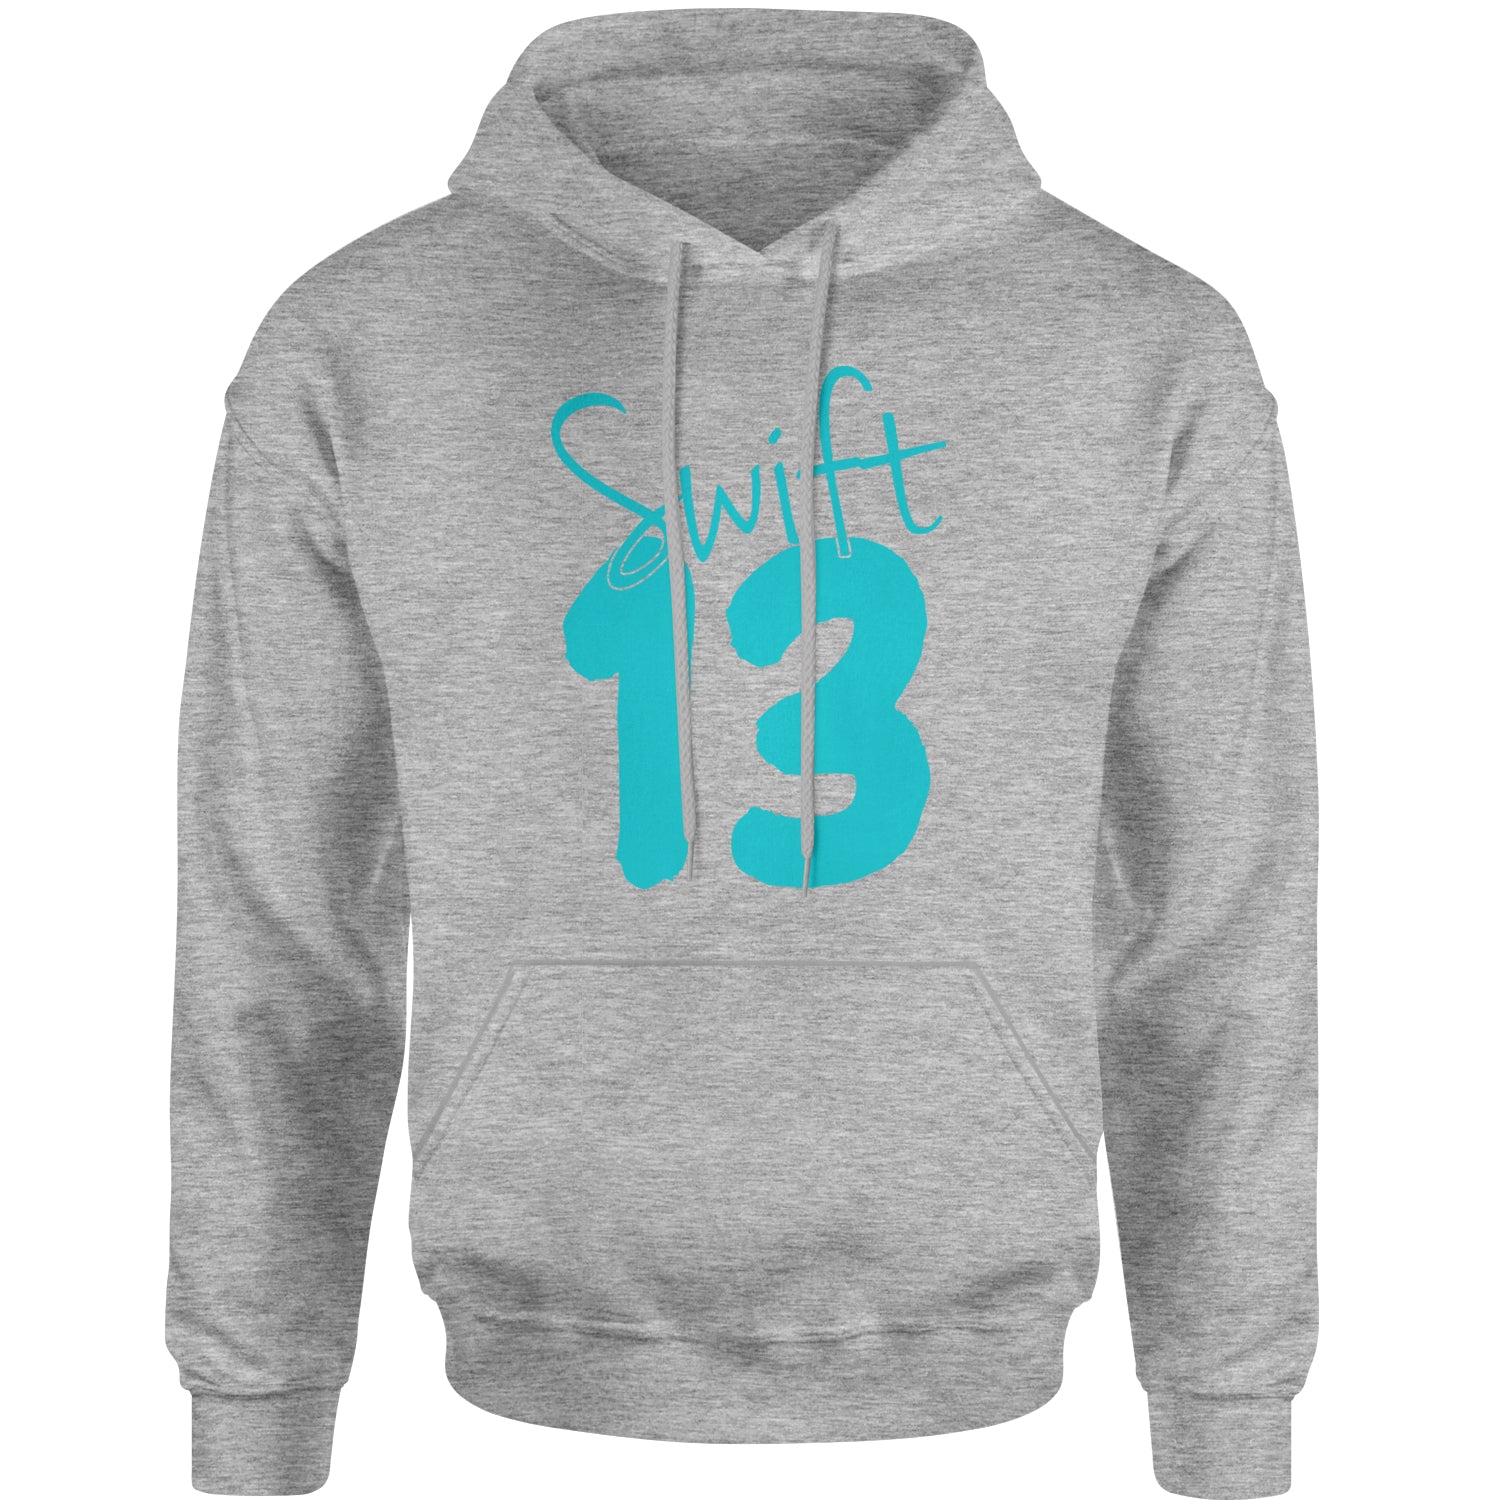 13 Swift 13 Lucky Number Era Adult Hoodie Sweatshirt